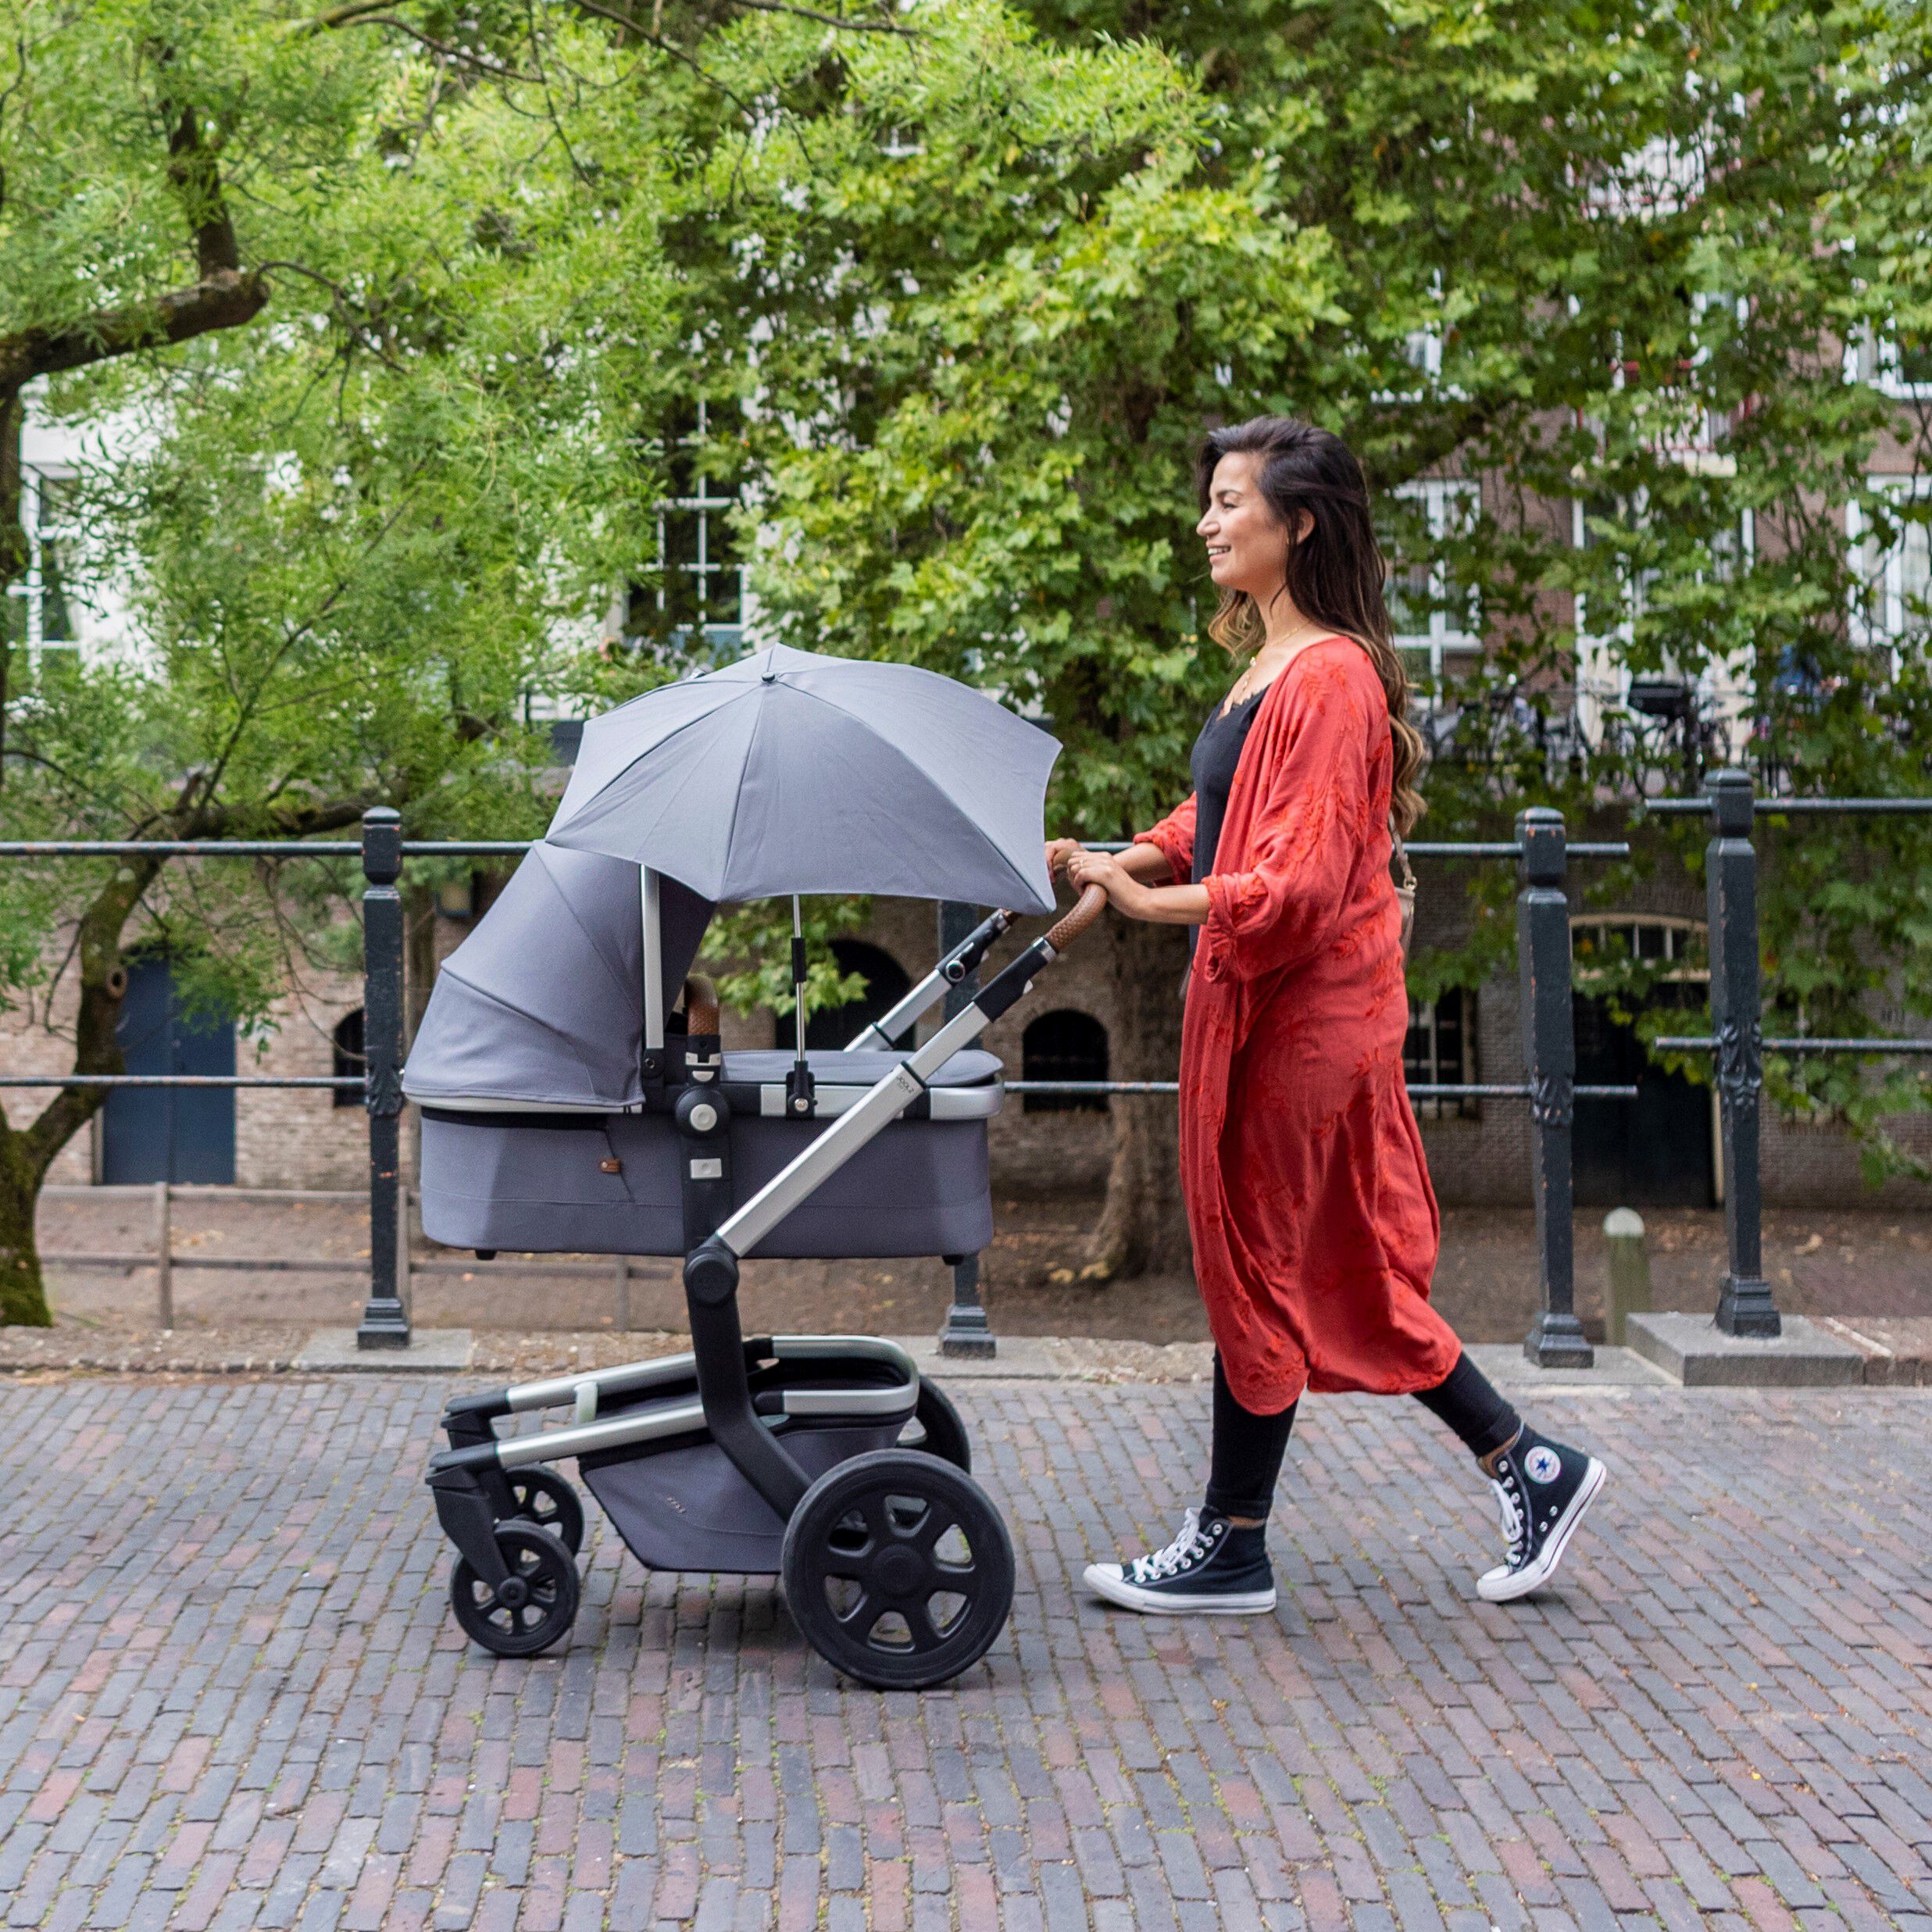 YIJU Baby Stroller Parasol Umbrella Adjustable with Umbrella Clip Fixing Device 360 Degree Sunshade for Bike Pram Trolley Wheelchair Buggy Lake Blue 